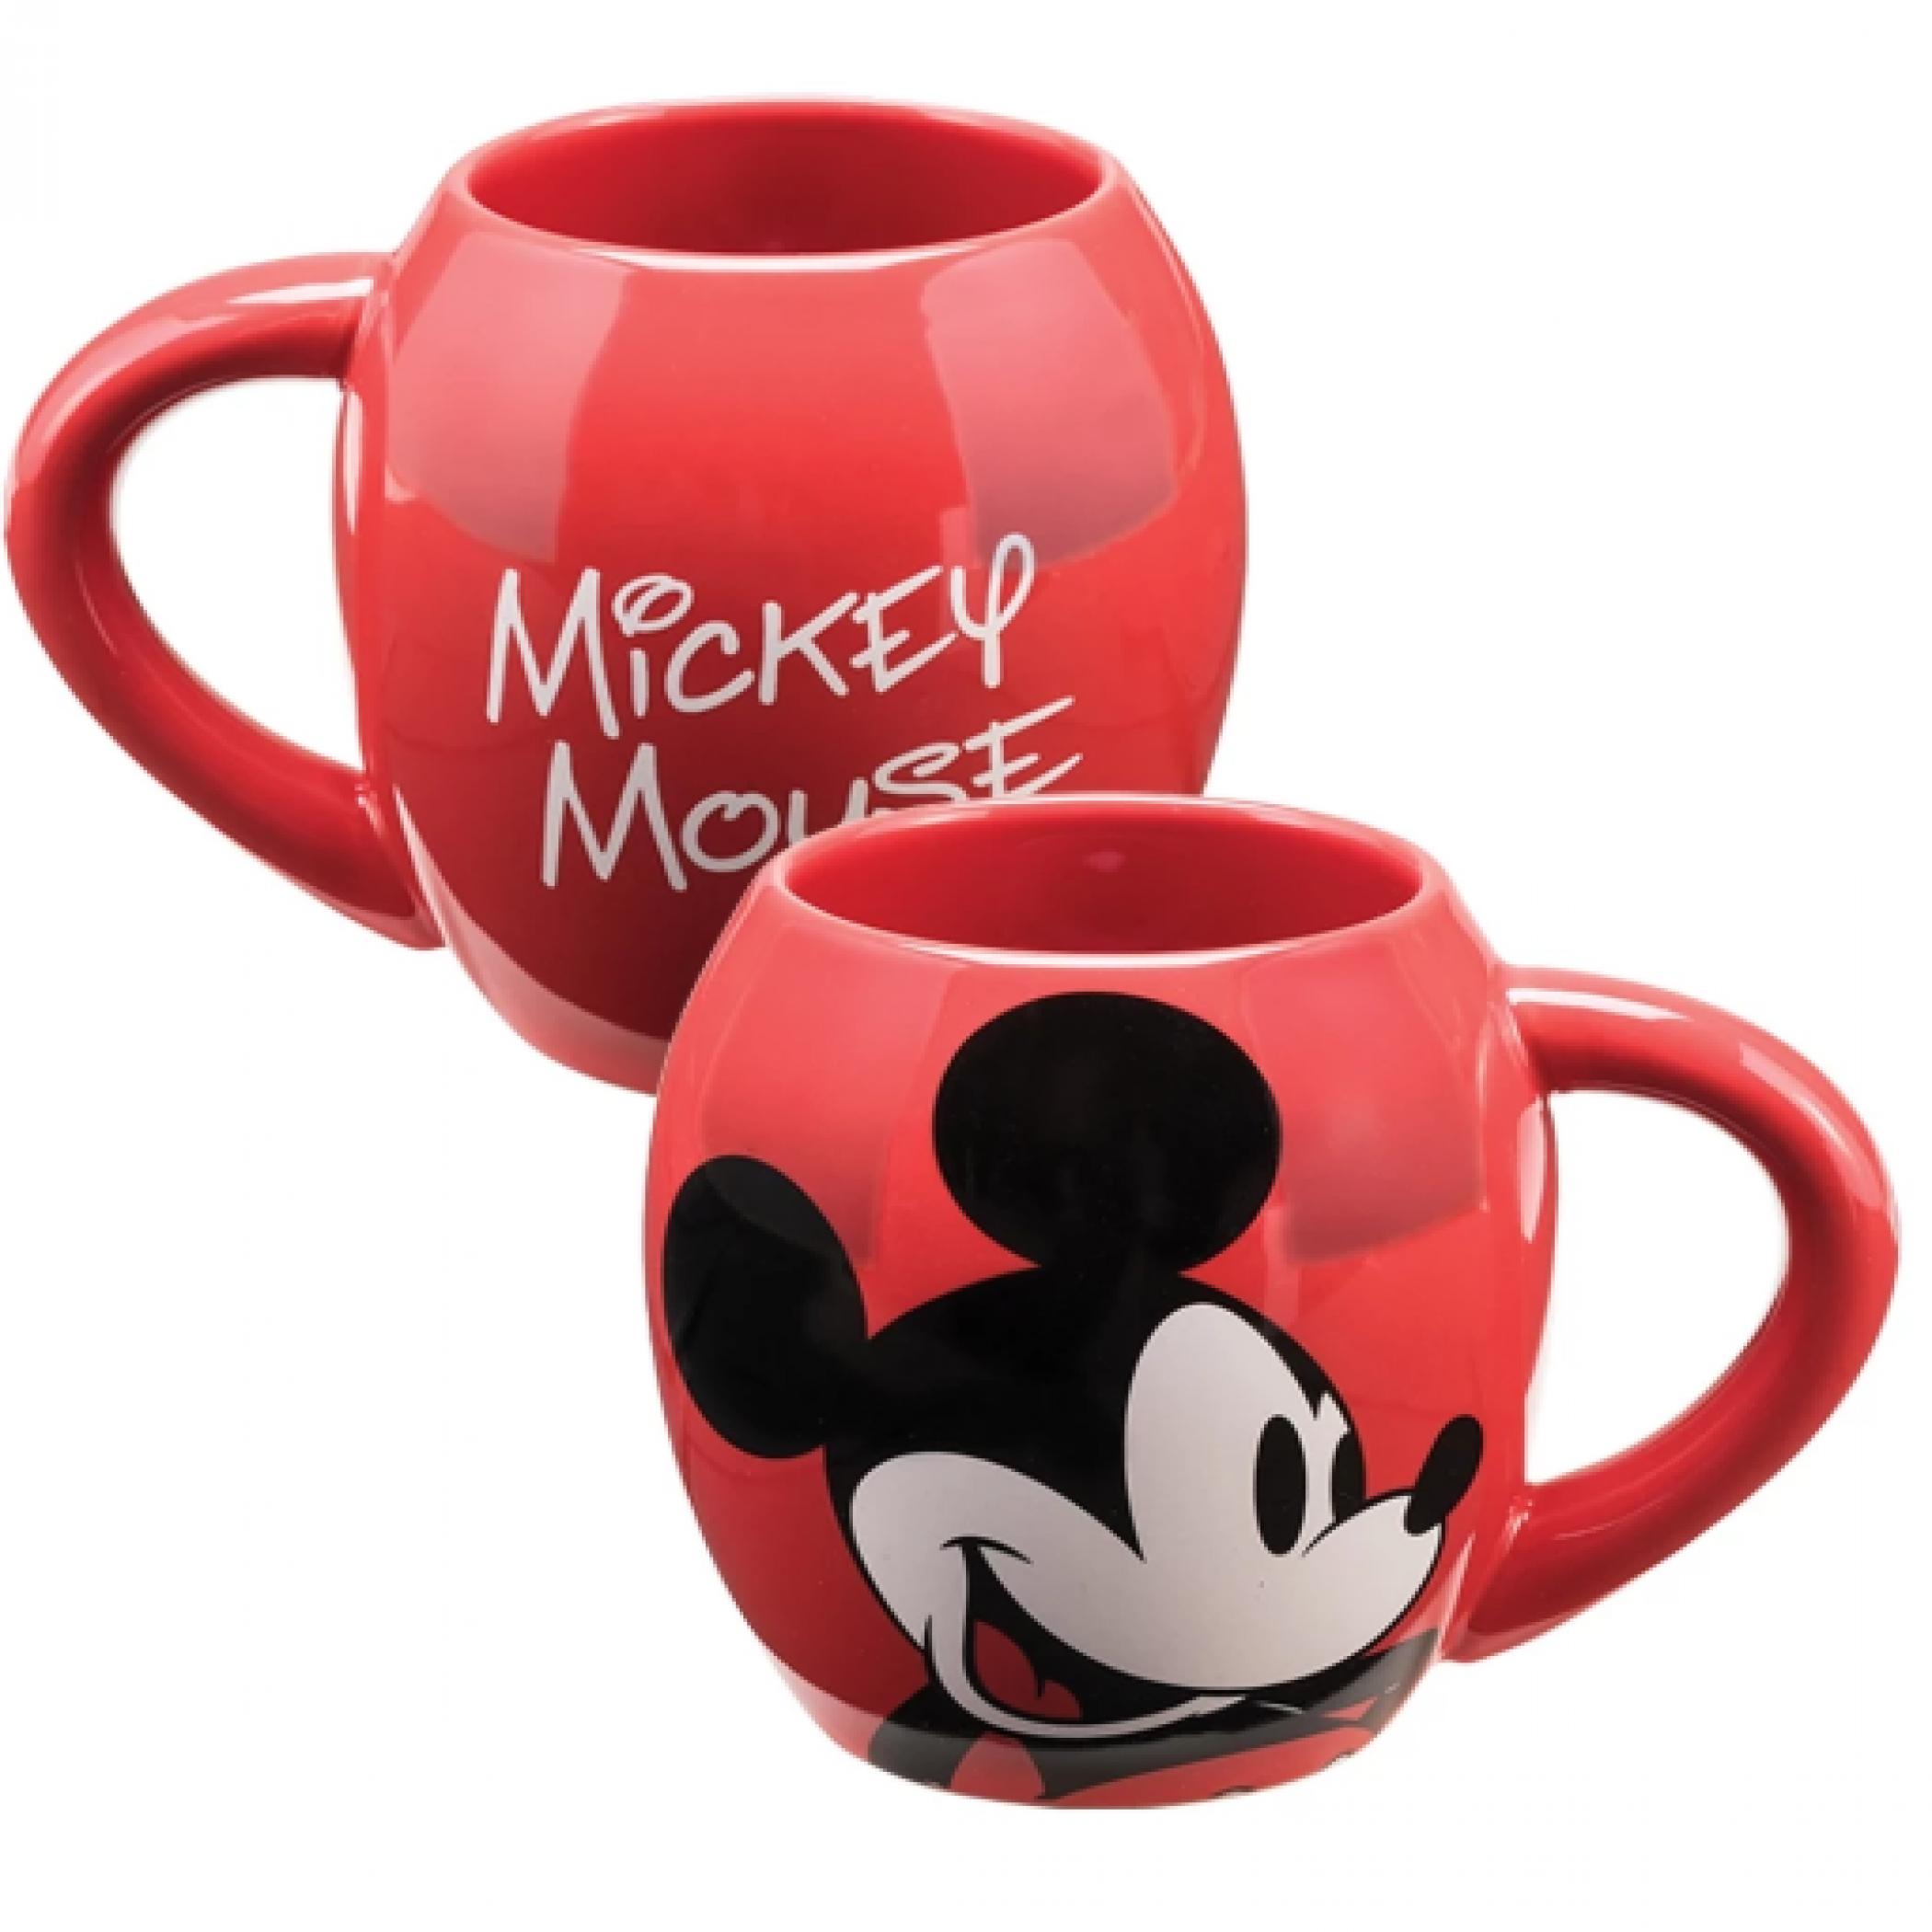 Disney Mickey Mouse Ceramic Mug, 20-oz, Red and Black